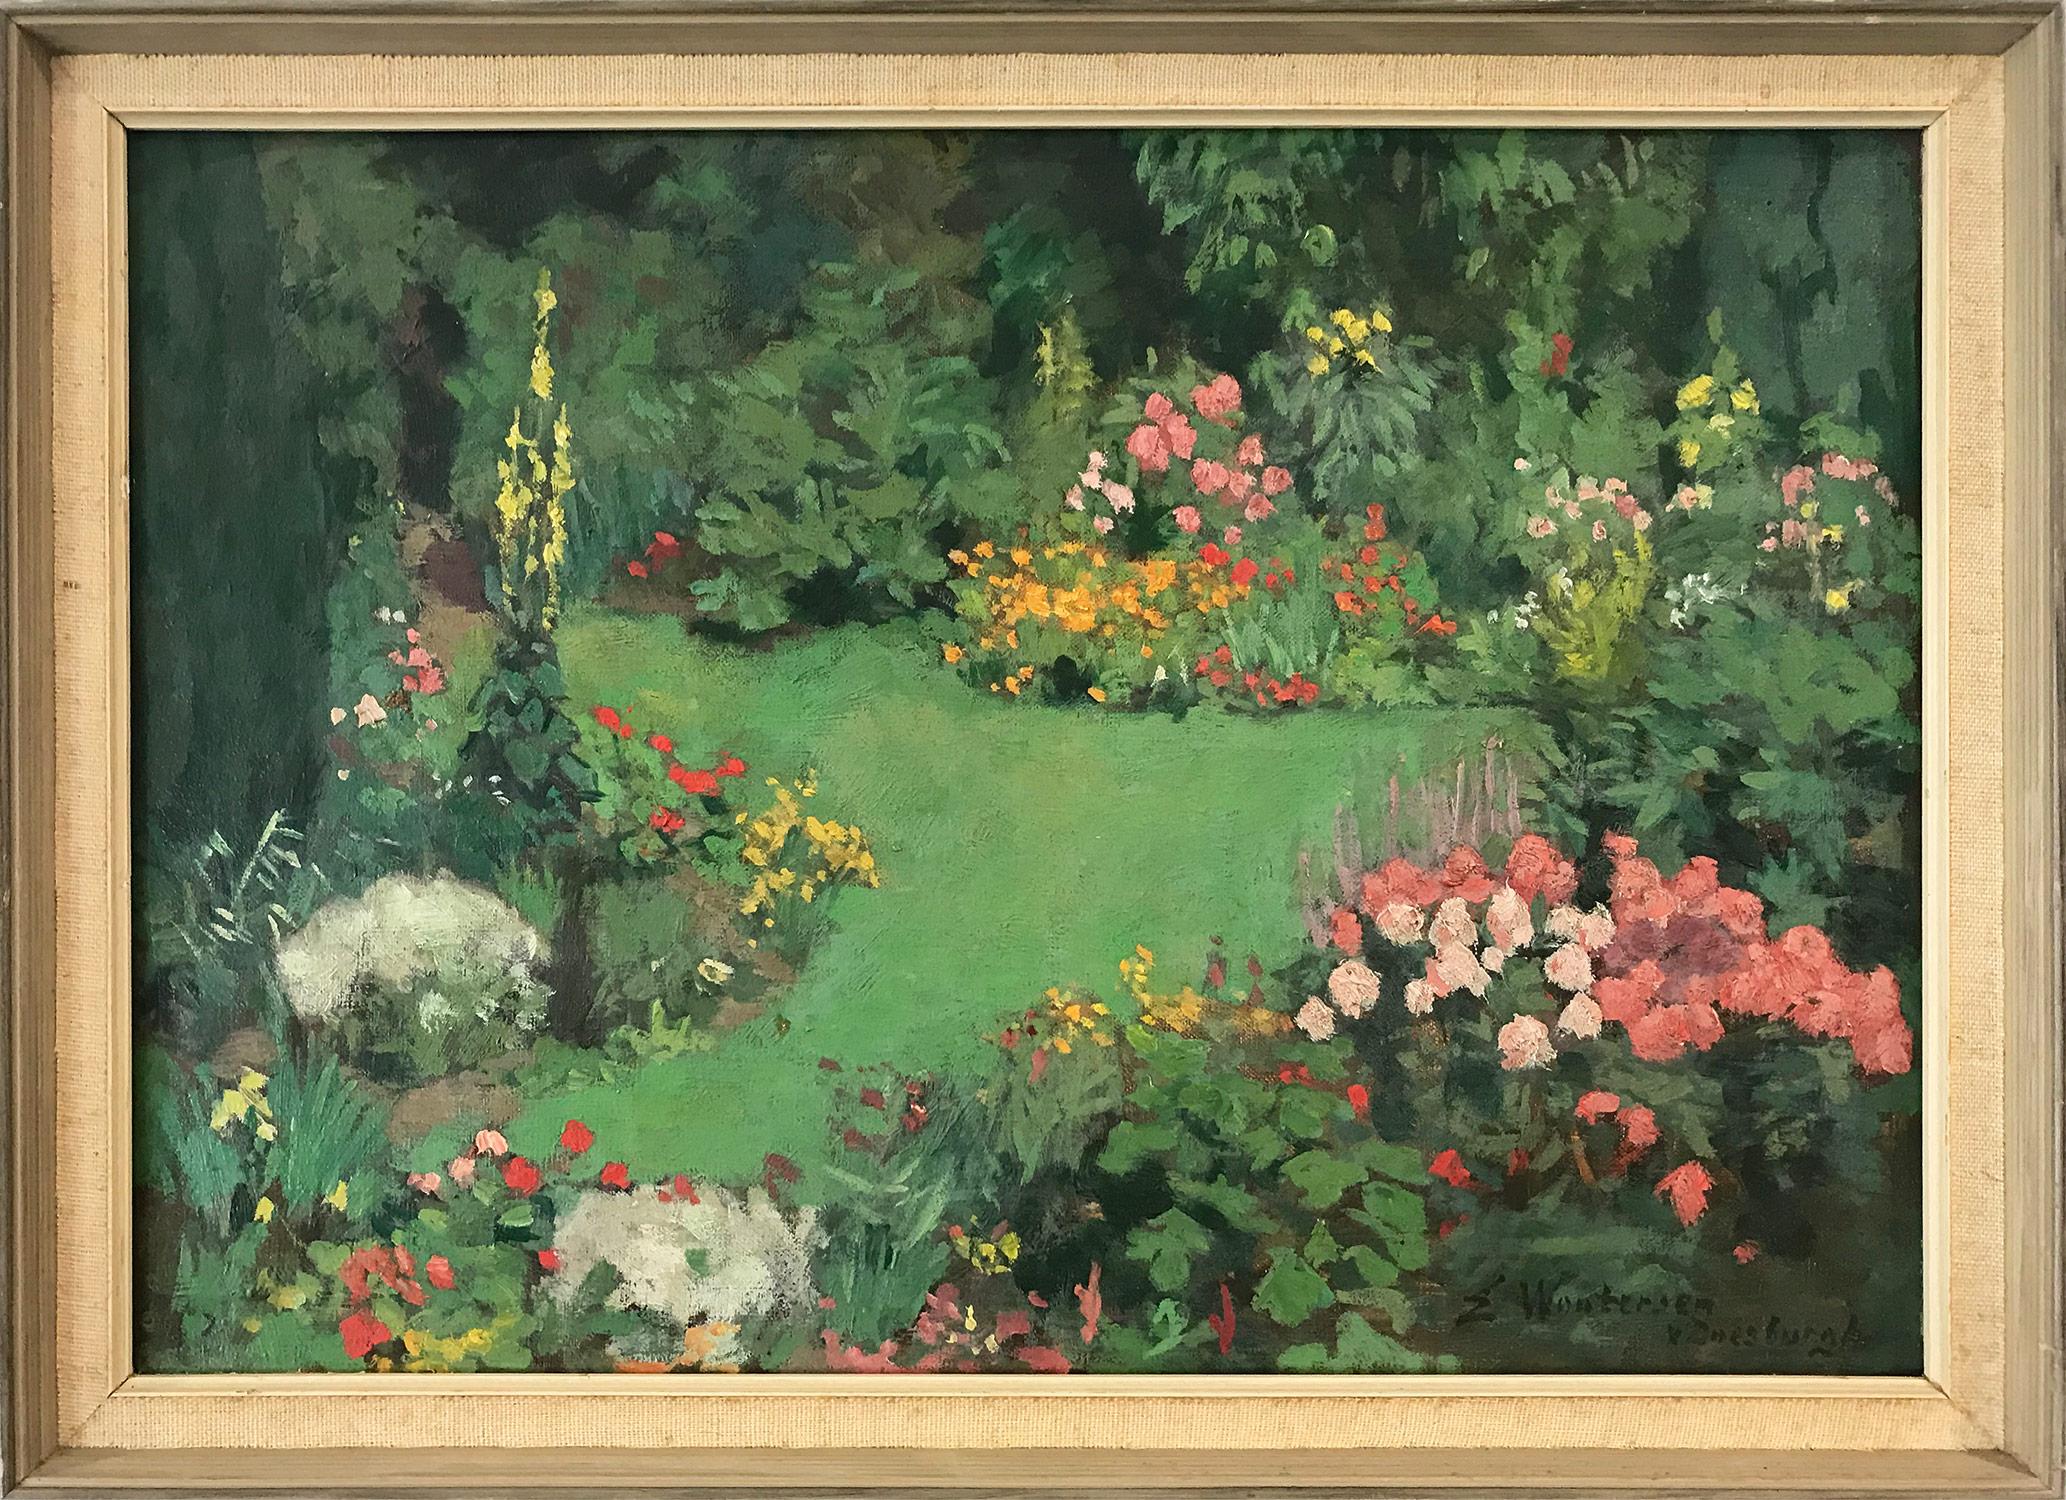 Elsa Wouterse van Doesburgh Landscape Painting - "Garden View with Flowers" Dutch Impressionist Landscape Oil Painting on Canvas